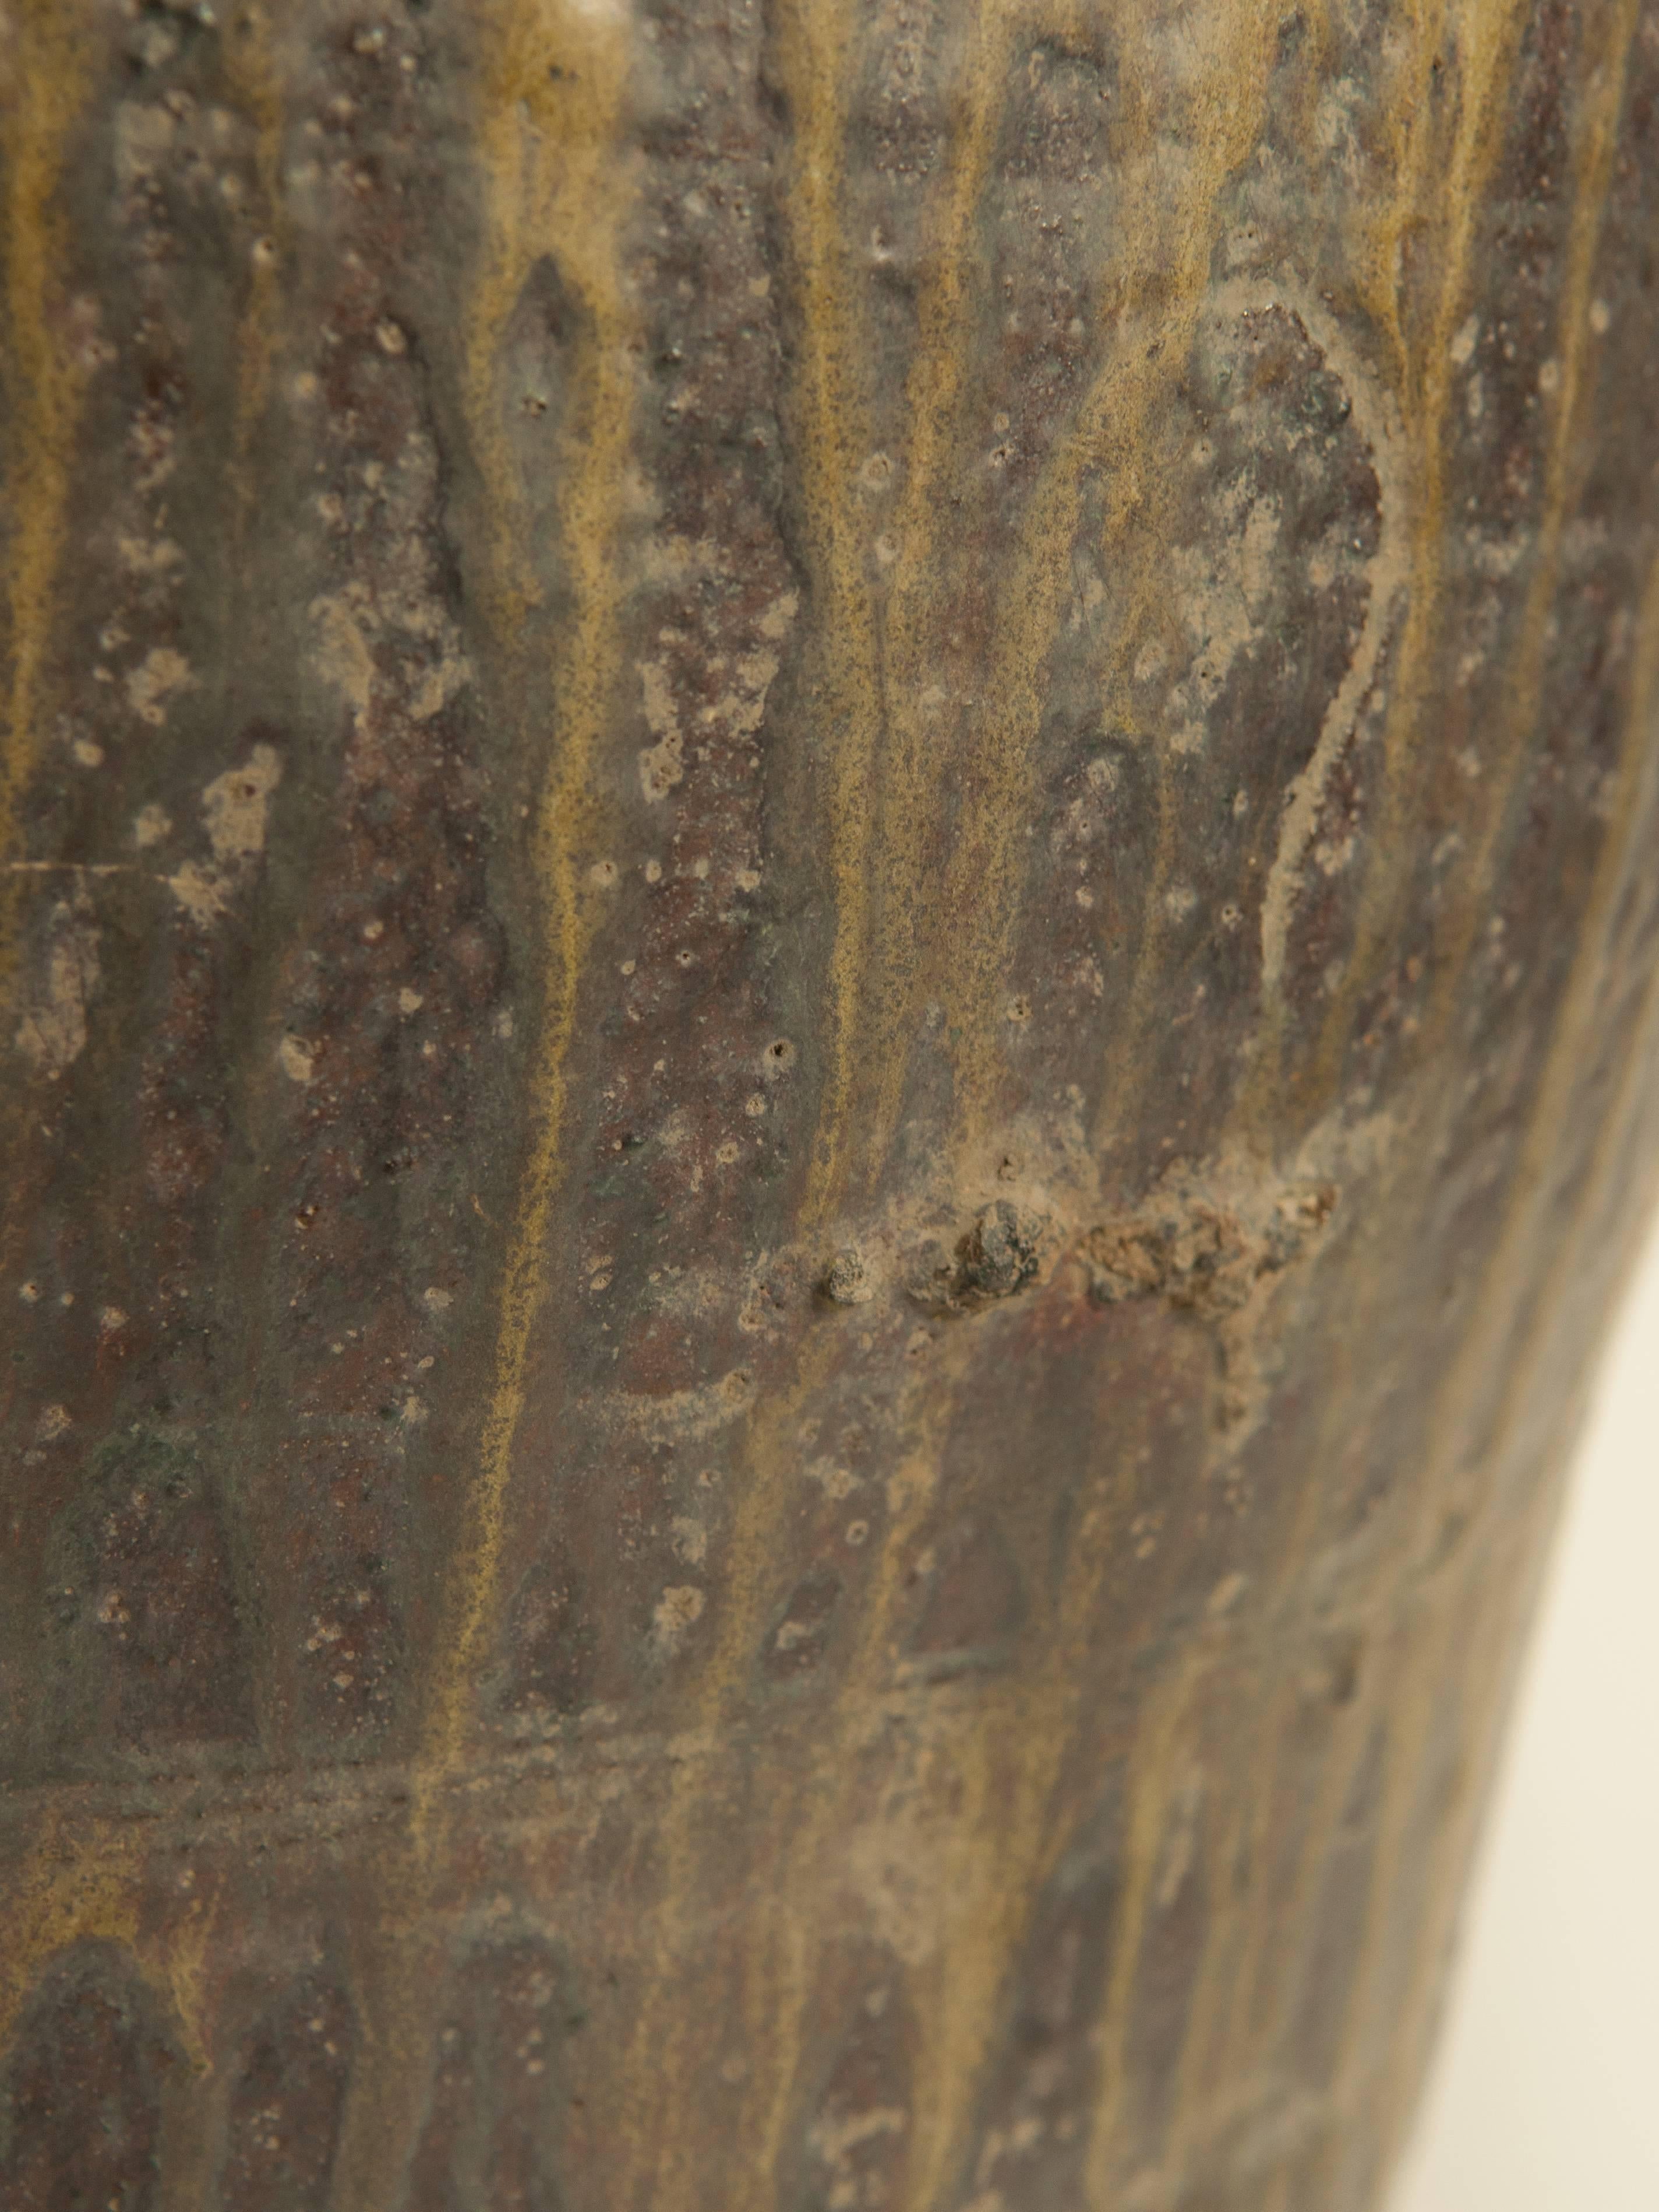 Hand-Crafted Martaban Ware Stoneware Storage Jar, Drip Glaze, Ming Dynasty, Found in Laos